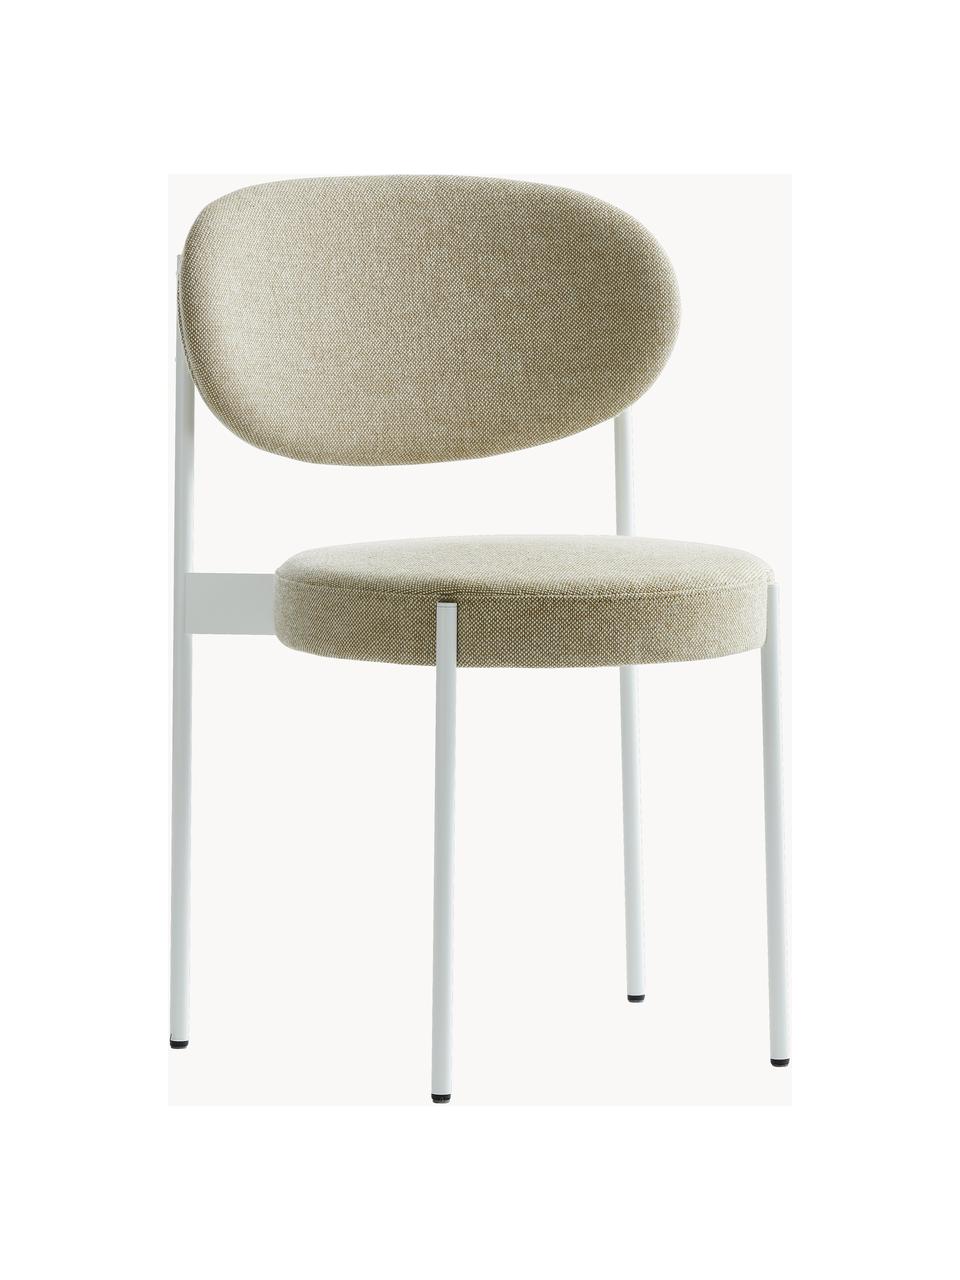 Vlněná polstrovaná židle Series 430, Béžová, bílá, Š 52 cm, H 54 cm